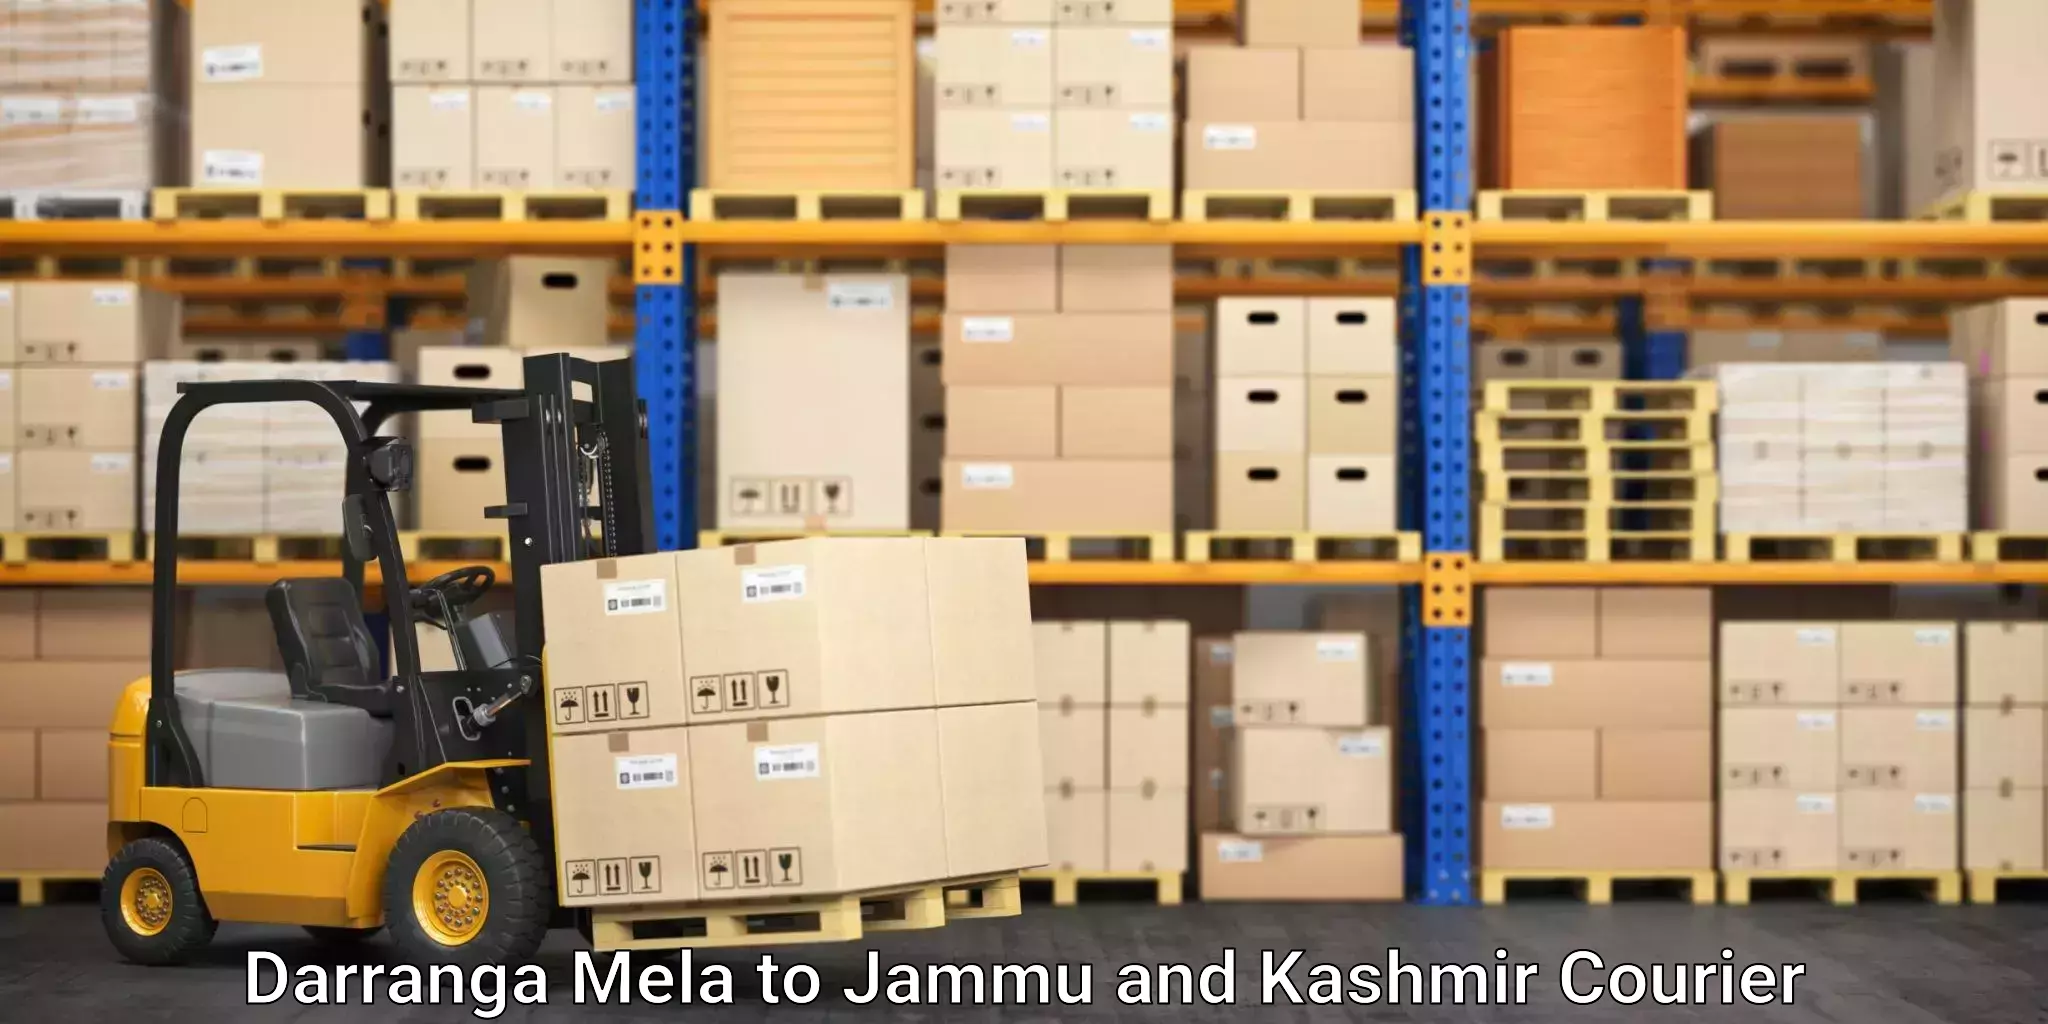 24/7 shipping services in Darranga Mela to Jammu